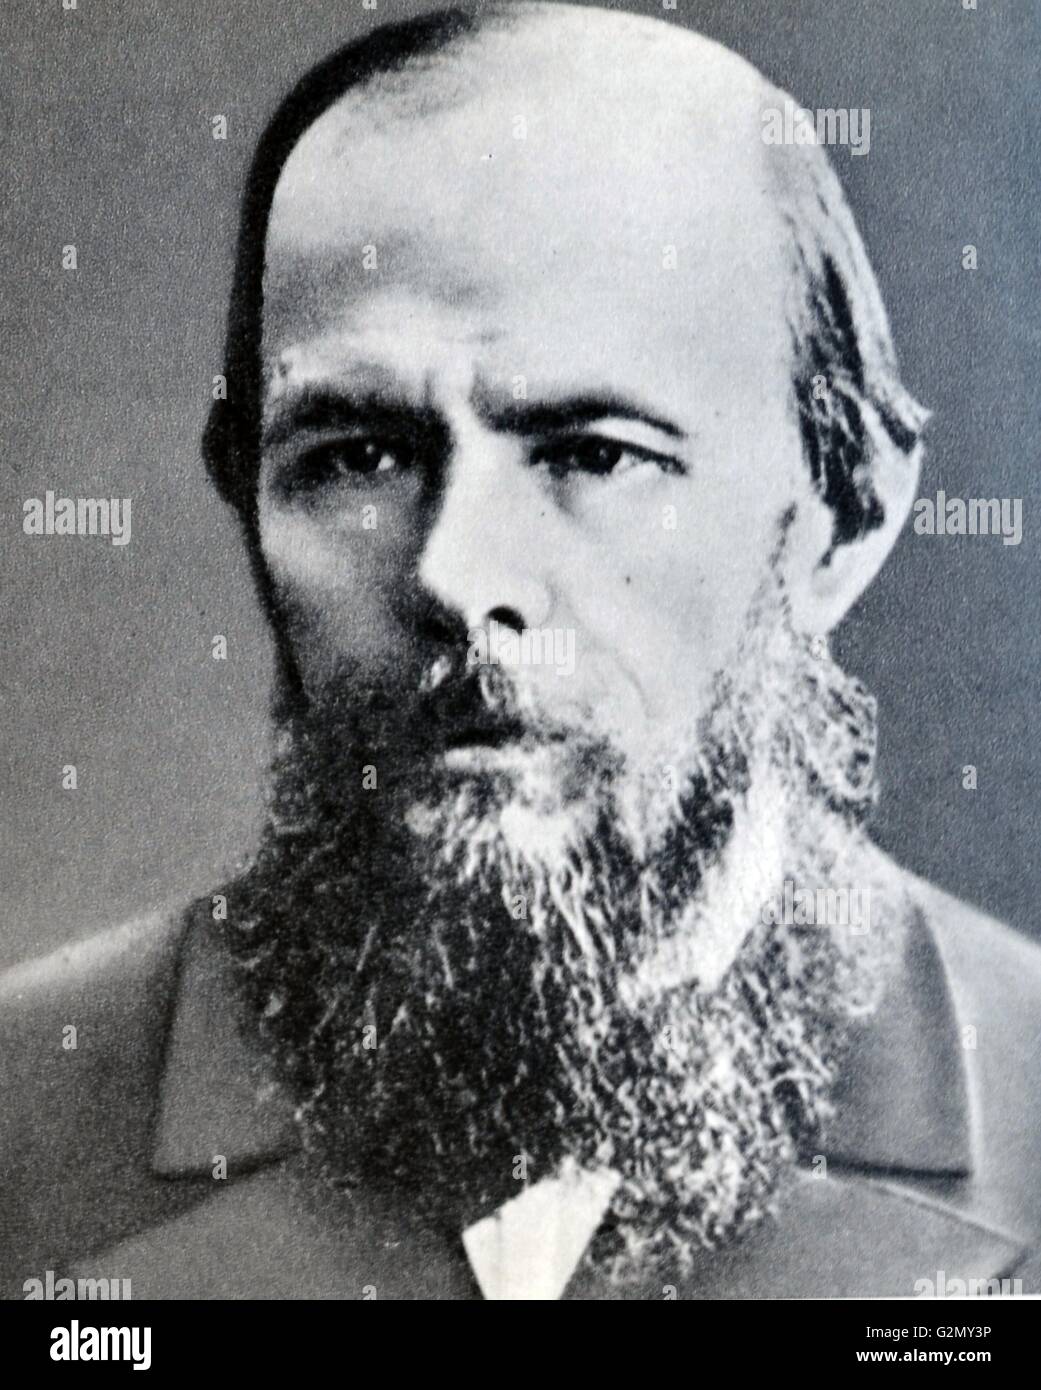 Fyodor Mikhailovich Dostoyevsky (11 November 1821 – 9 February 1881), sometimes transliterated Dostoevsky, was a Russian novelist, short story writer, essayist and philosopher. Stock Photo